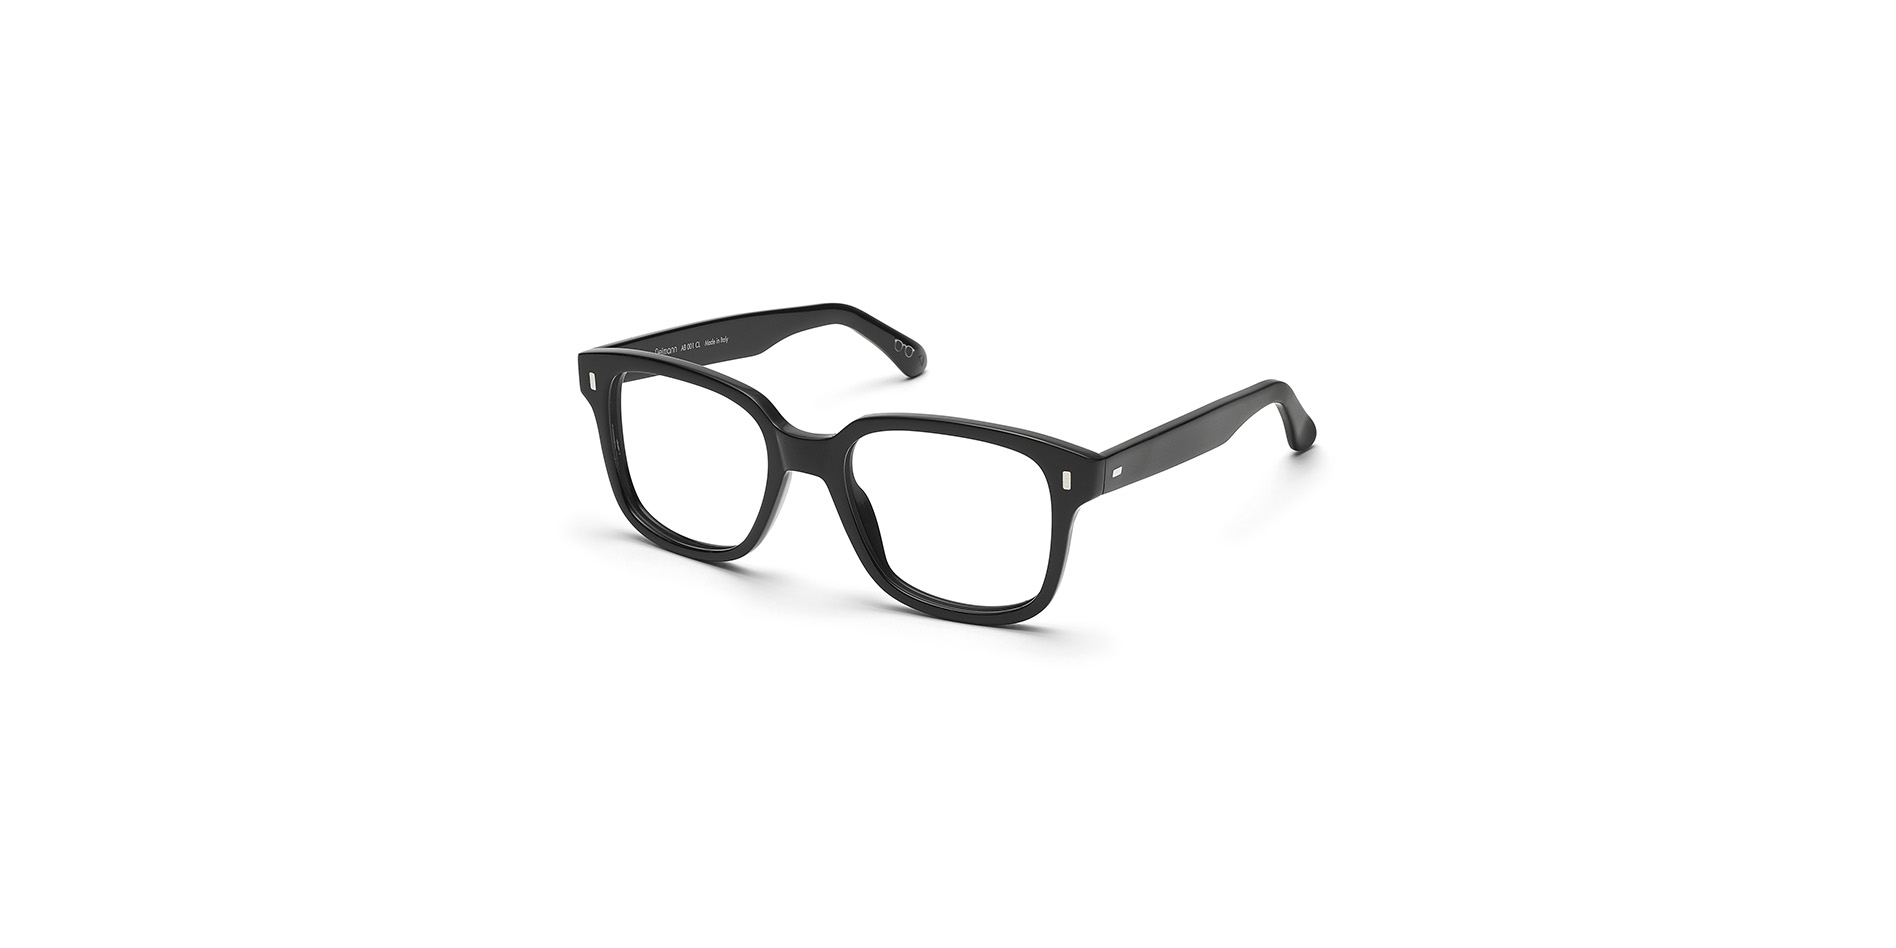 Herrenbrille AB 001 CL